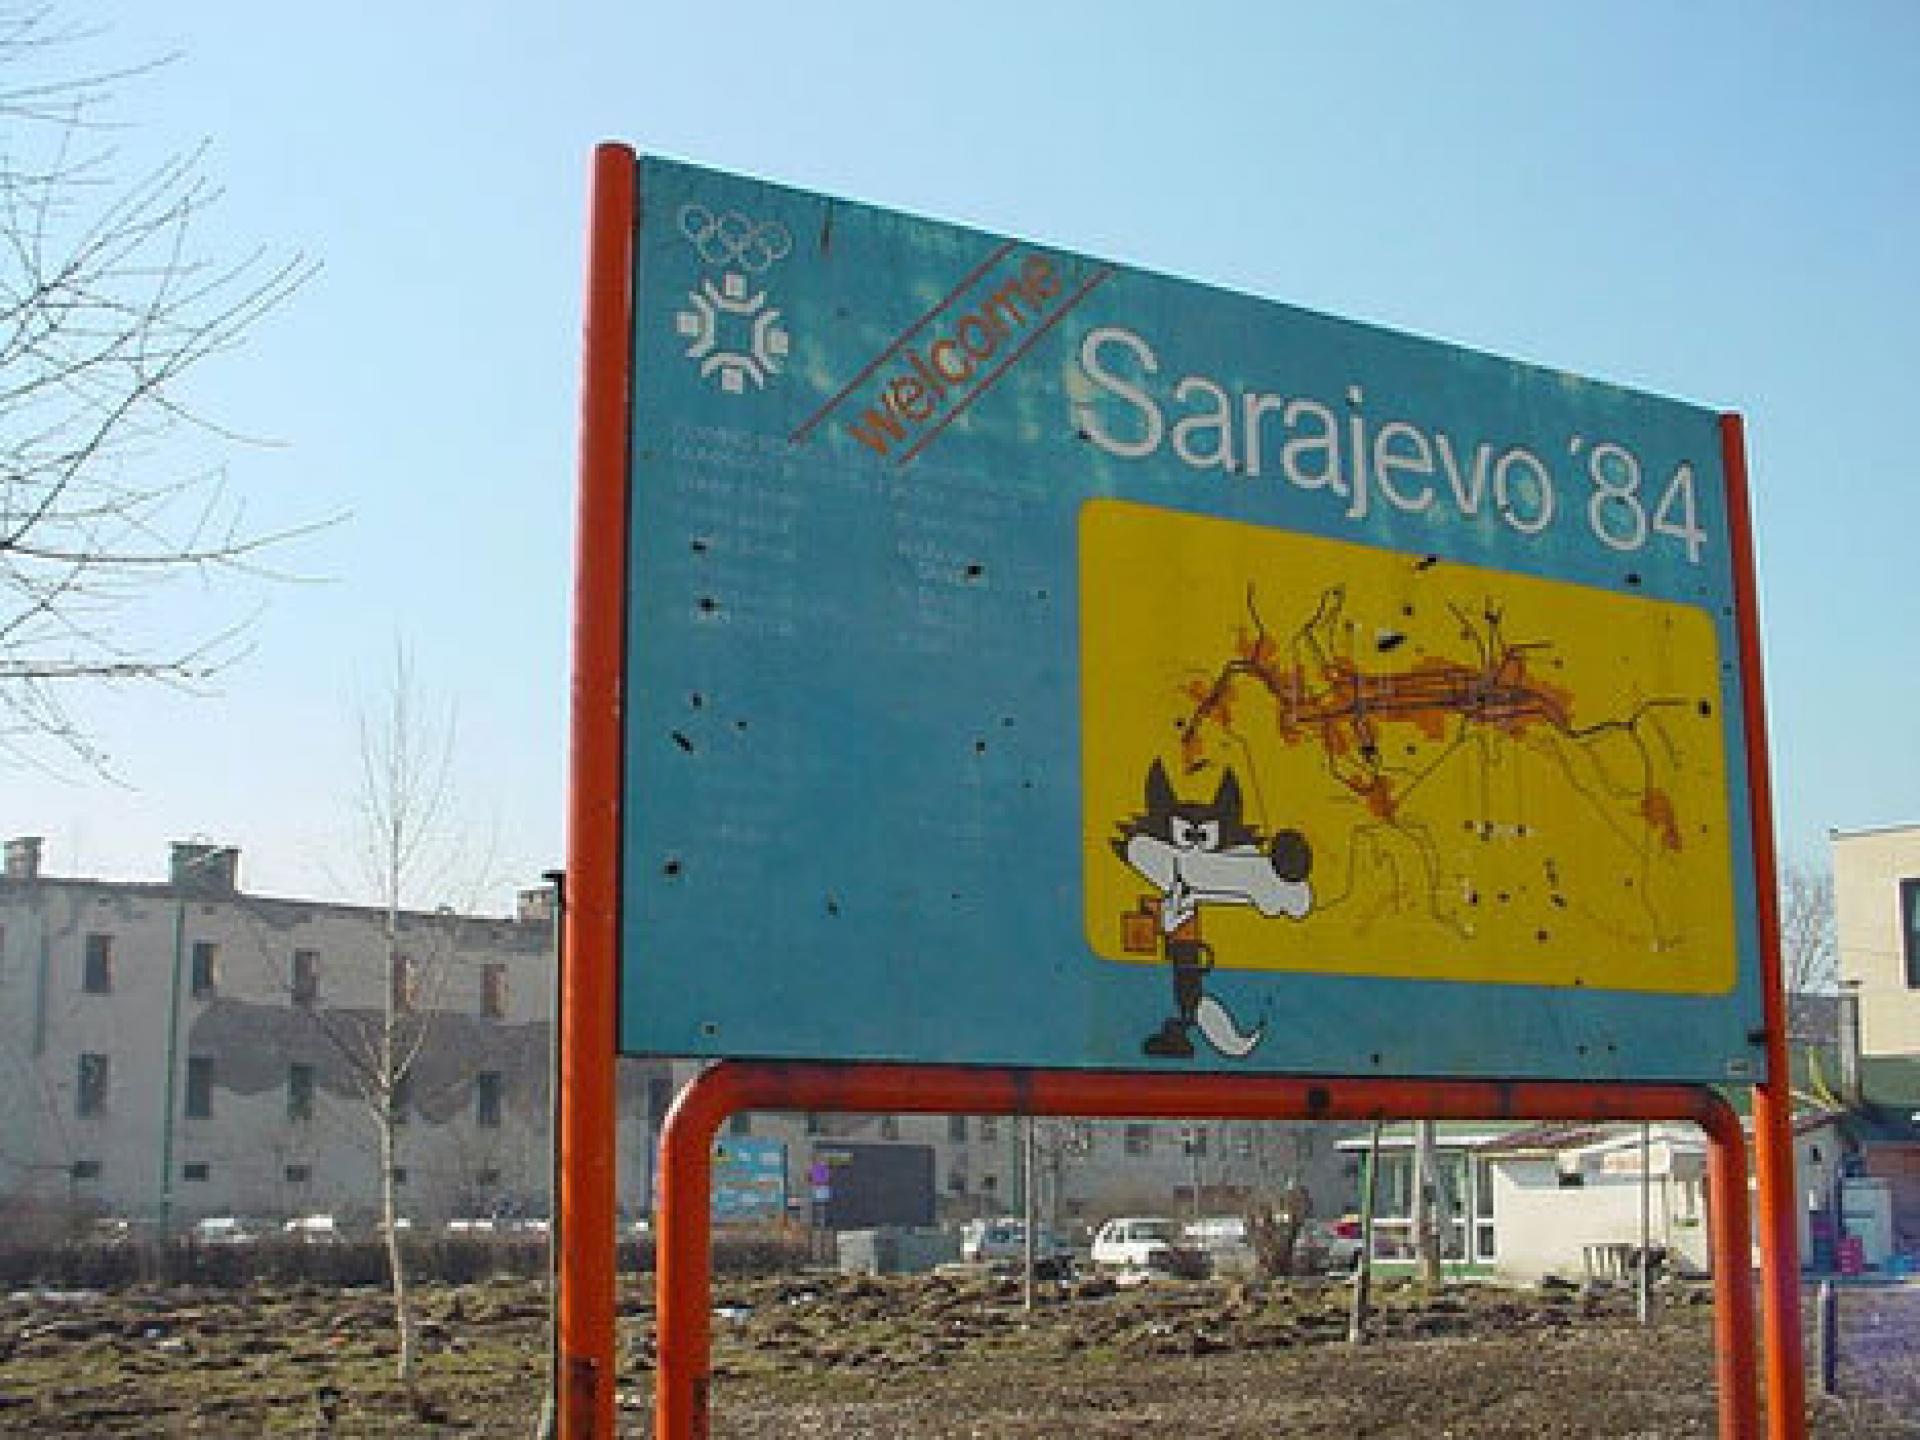 The 1984 Winter Olympics known as Sarajevo ‘84, was held between 8 and 19 February 1984 in Sarajevo, Yugoslavia.